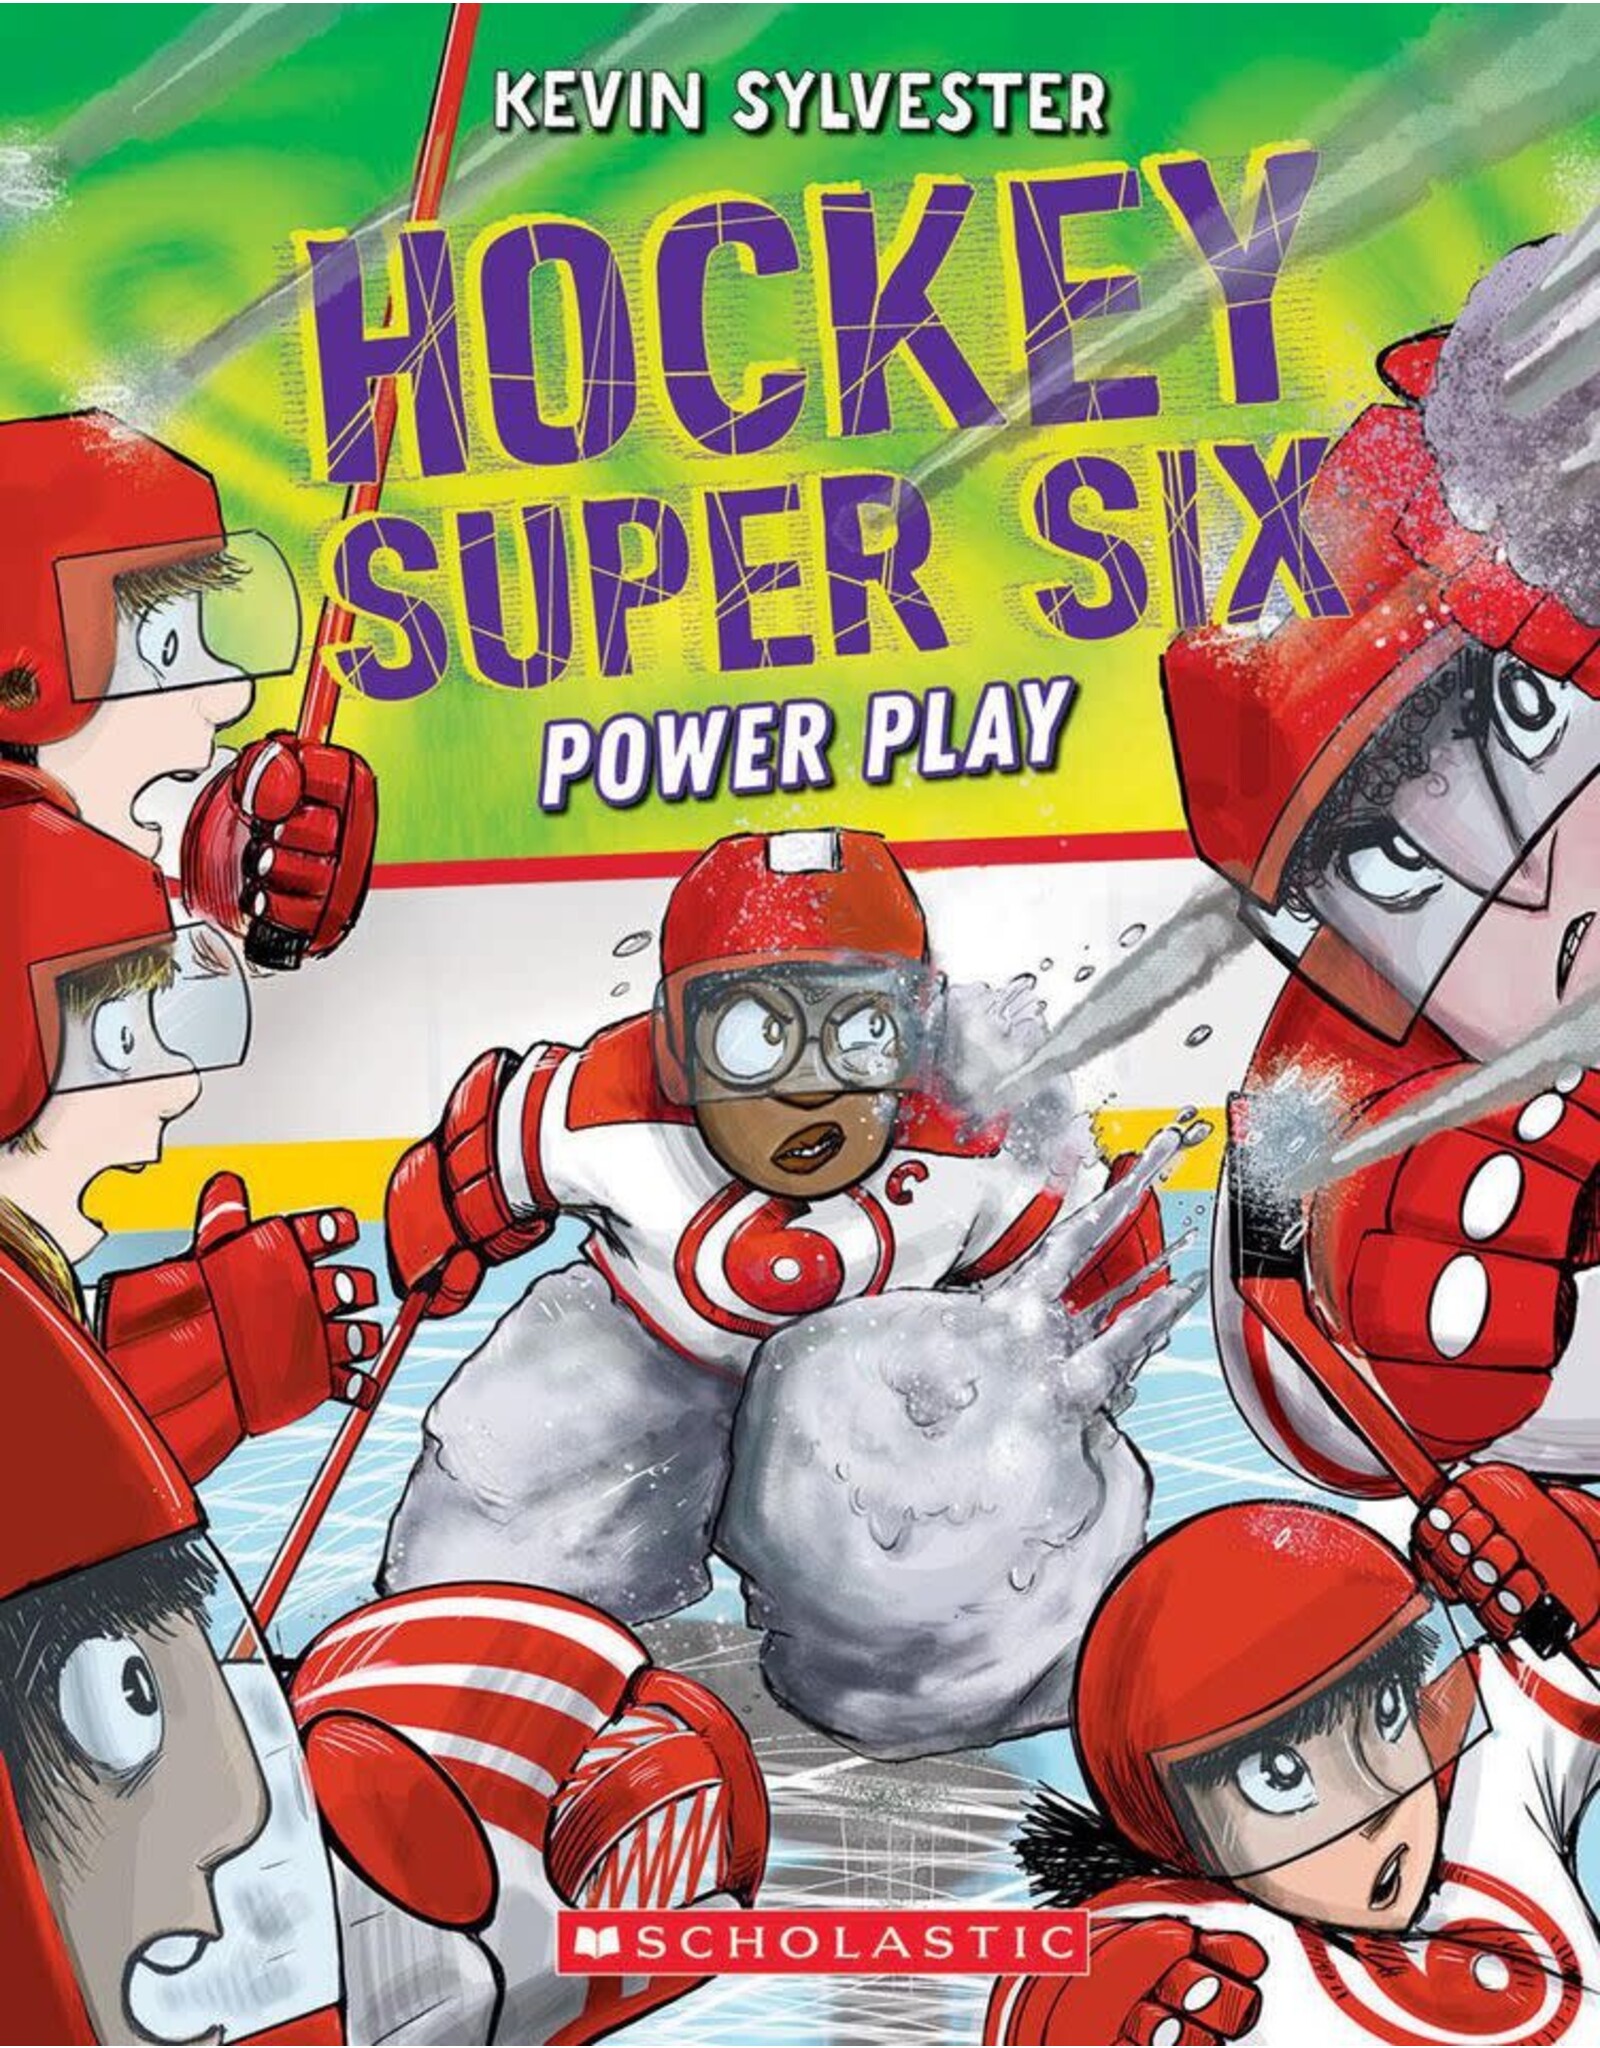 Scholastic Hockey Super Six #7: Power Play